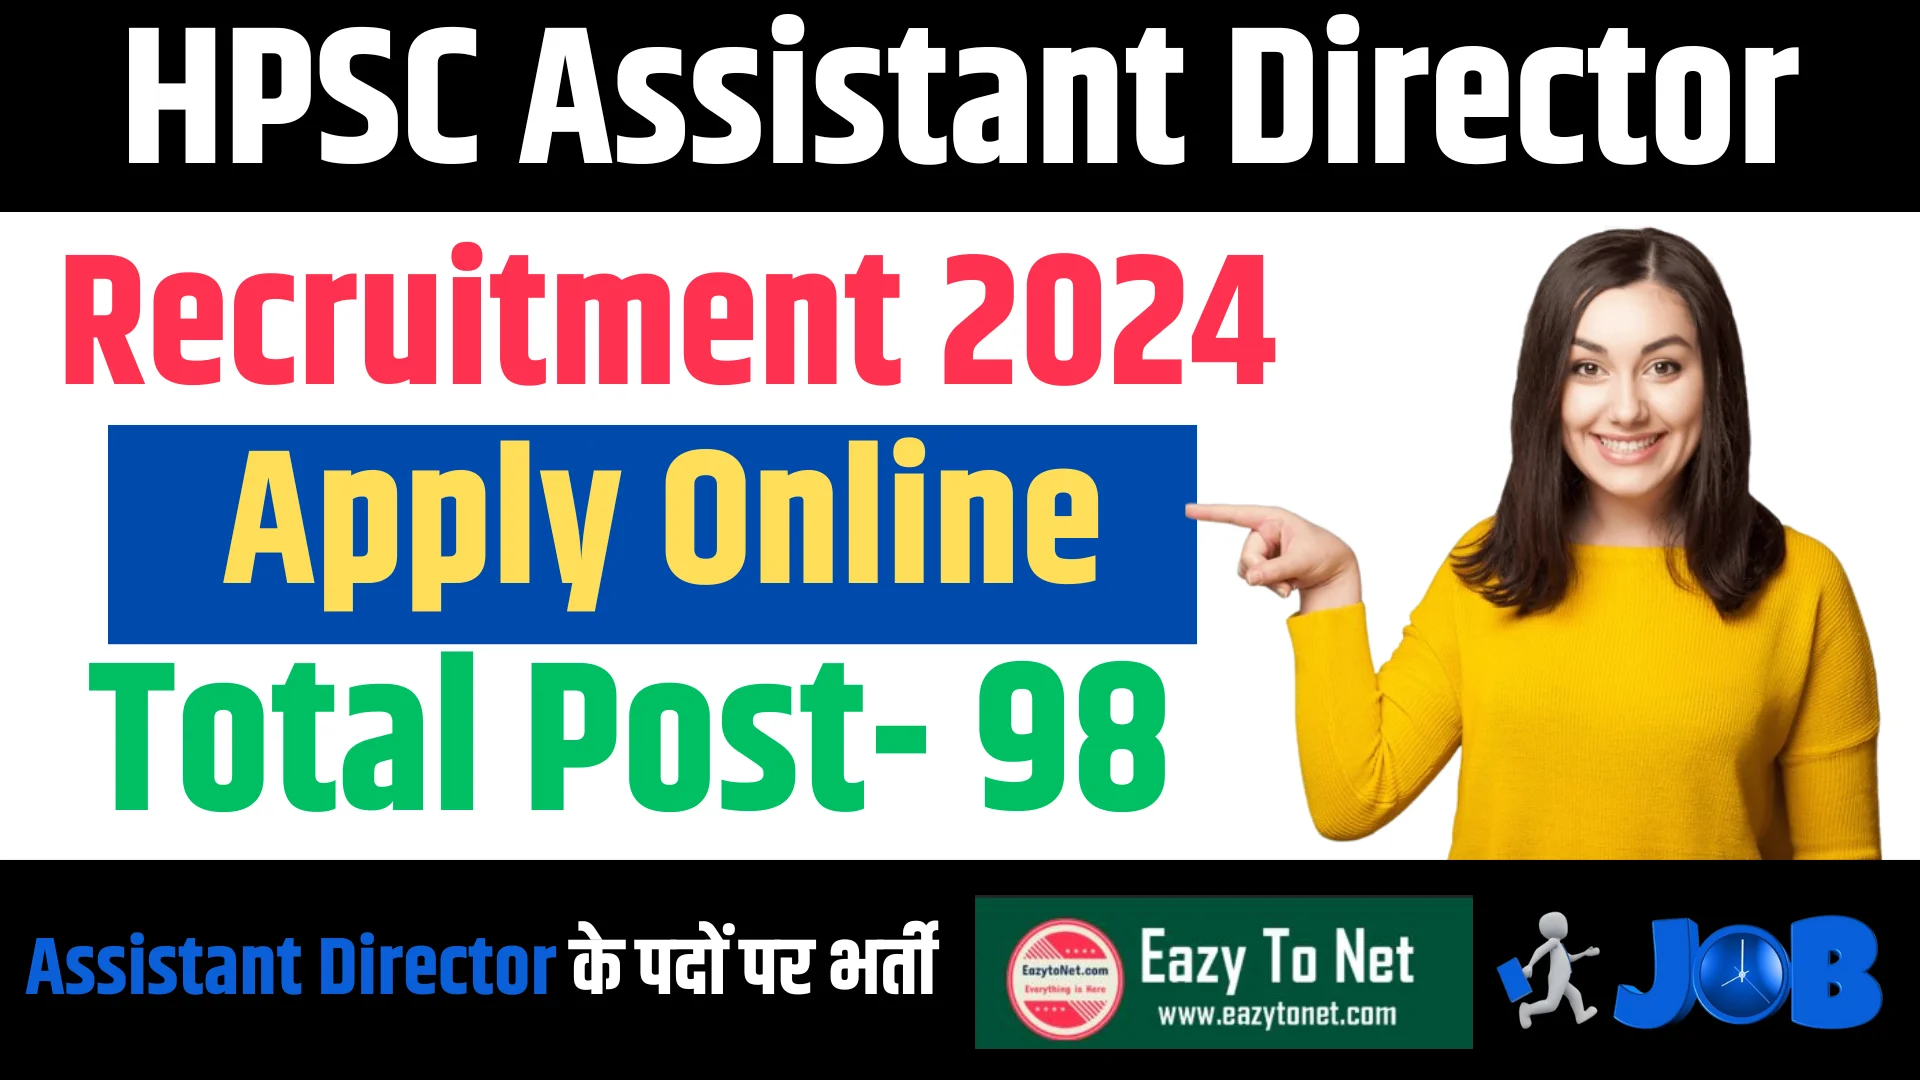 HPSC Assistant Director Recruitment 2024: HPSC Assistant Director Vacancy 2024 Apply Online, Notification Out